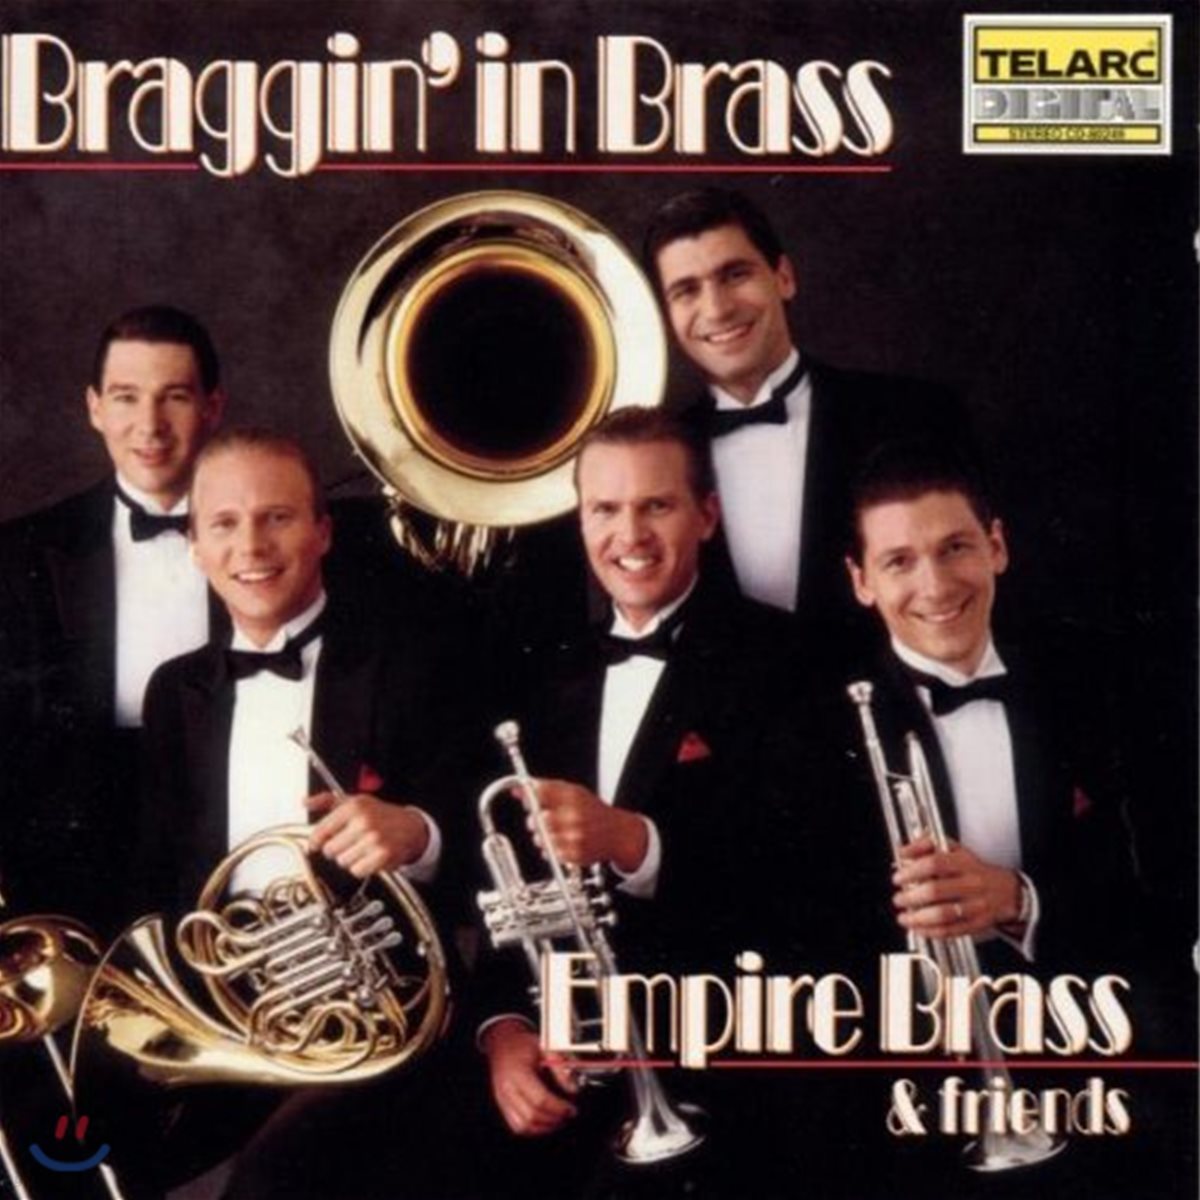 Empire Brass & Friends 엠파이어 브라스가 연주하는 듀크 엘링튼, 팻츠 월러, 젤리 롤 모턴, 콜 포터 (Braggin' in Brass - Music of Duke Ellington, Fats Waller, Jelly Roll Morton & Cole Porter)